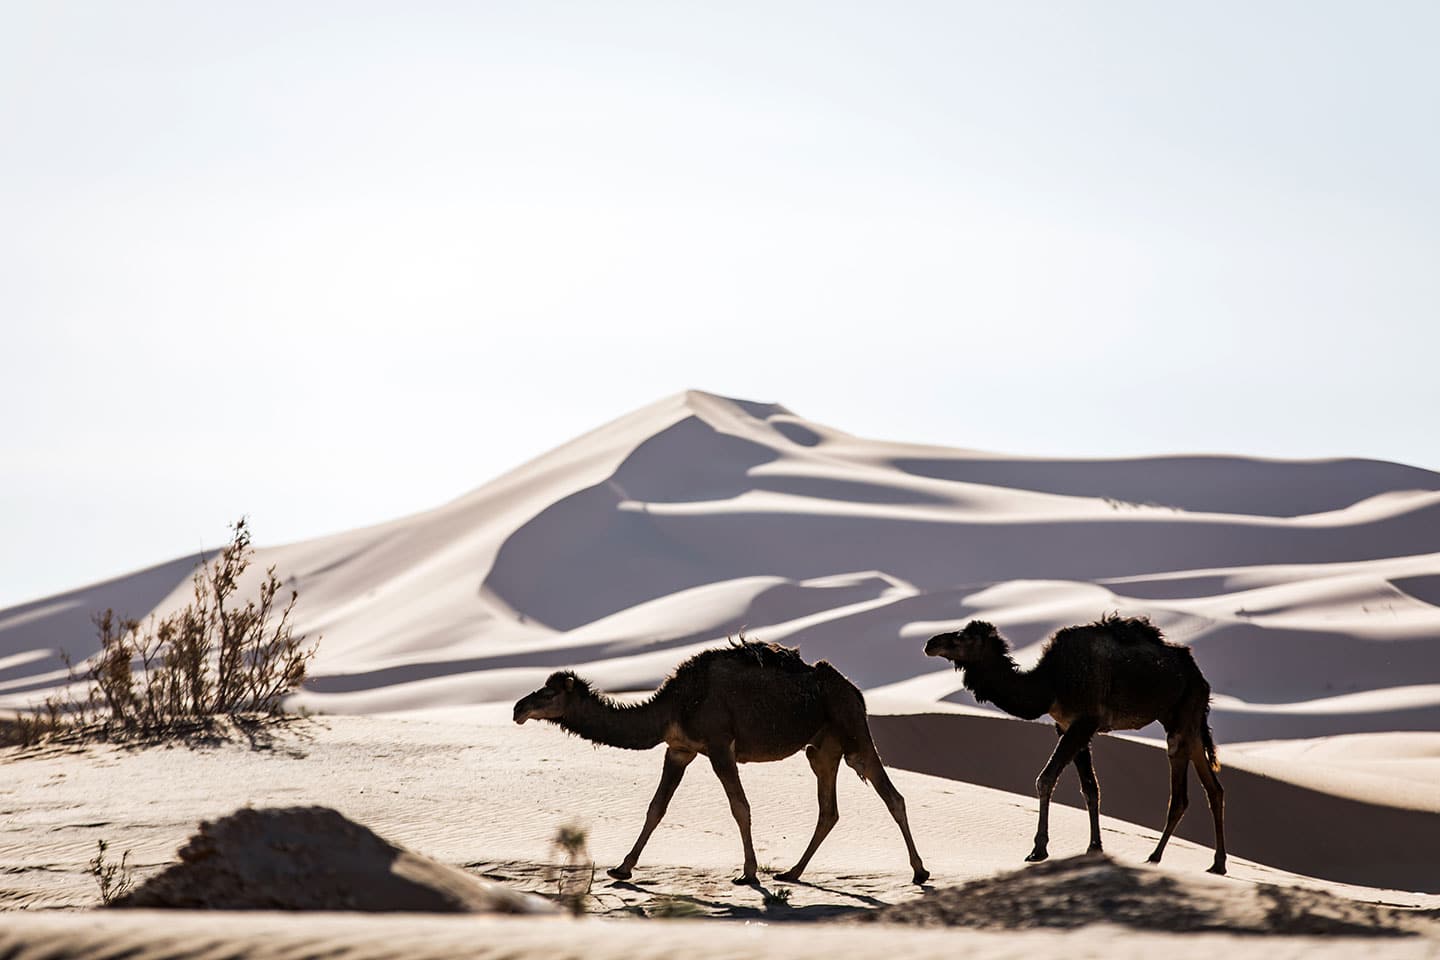 Wild camels roaming the Sahara desert in Morocco